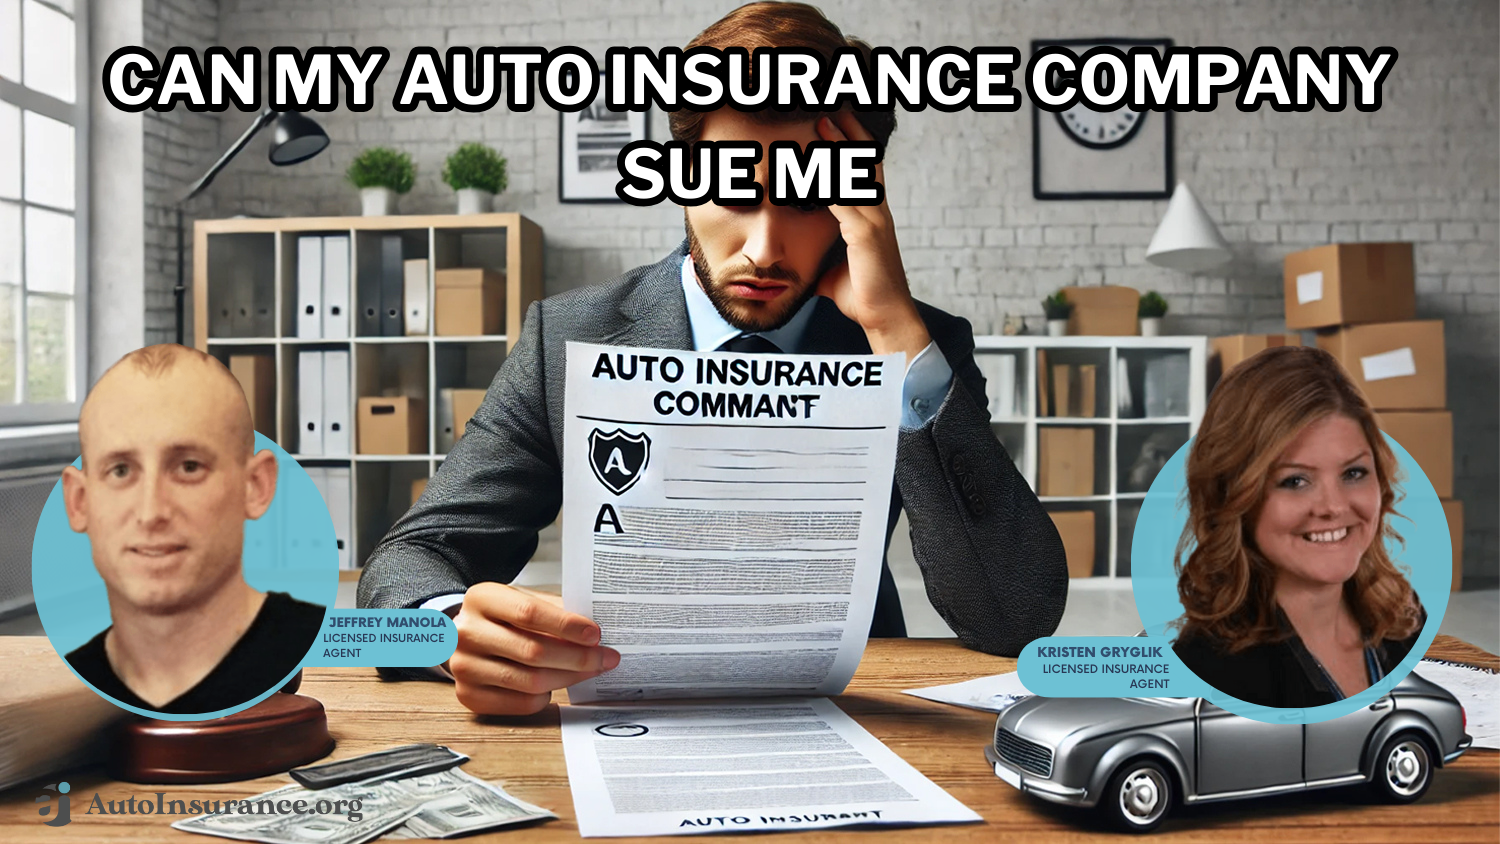 Can my auto insurance company sue me?